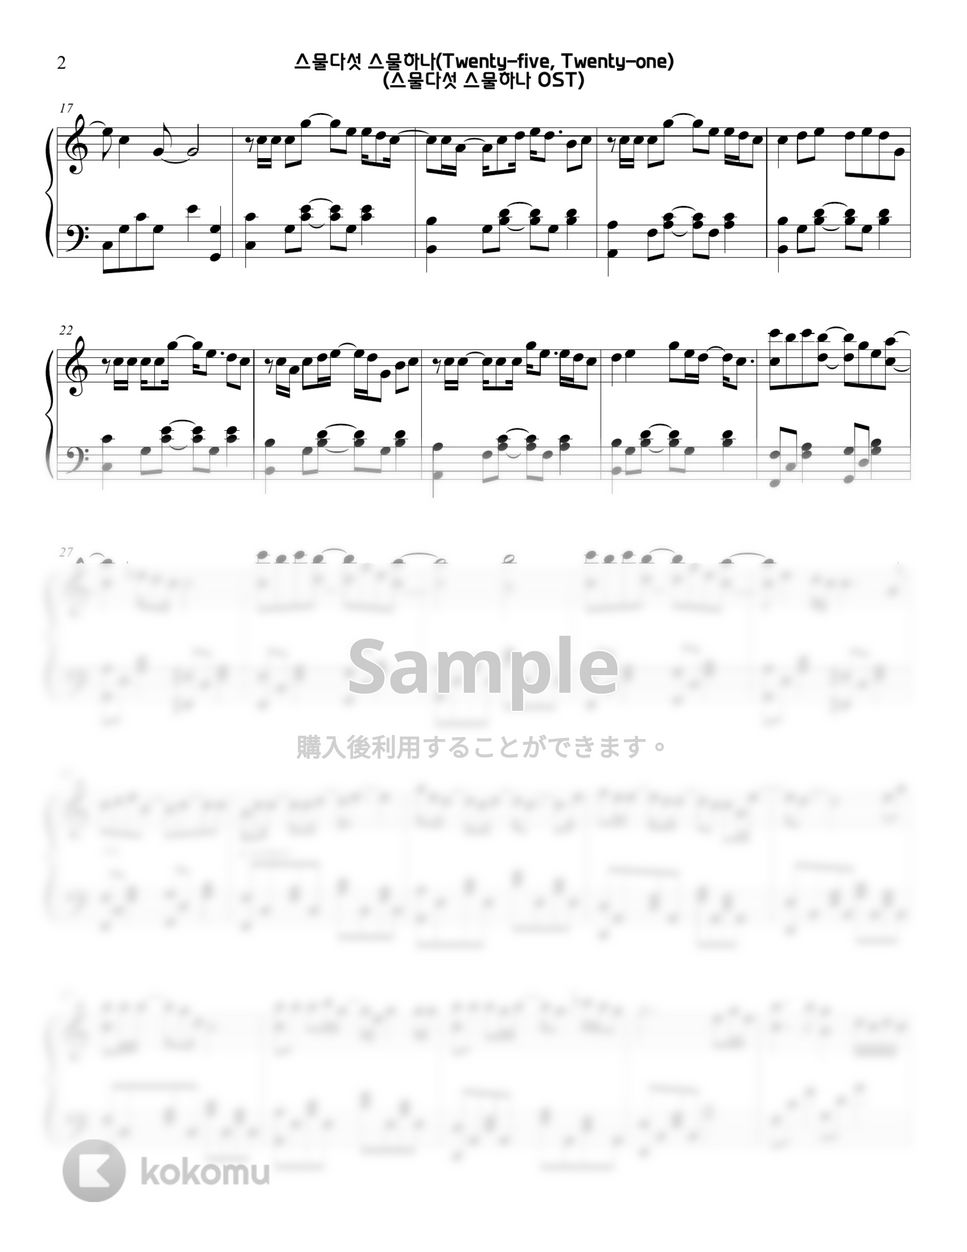 Twenty-Five Twenty-one OST - 25, 21(The hidden meanings) - Jaurim by Sunny Fingers Piano